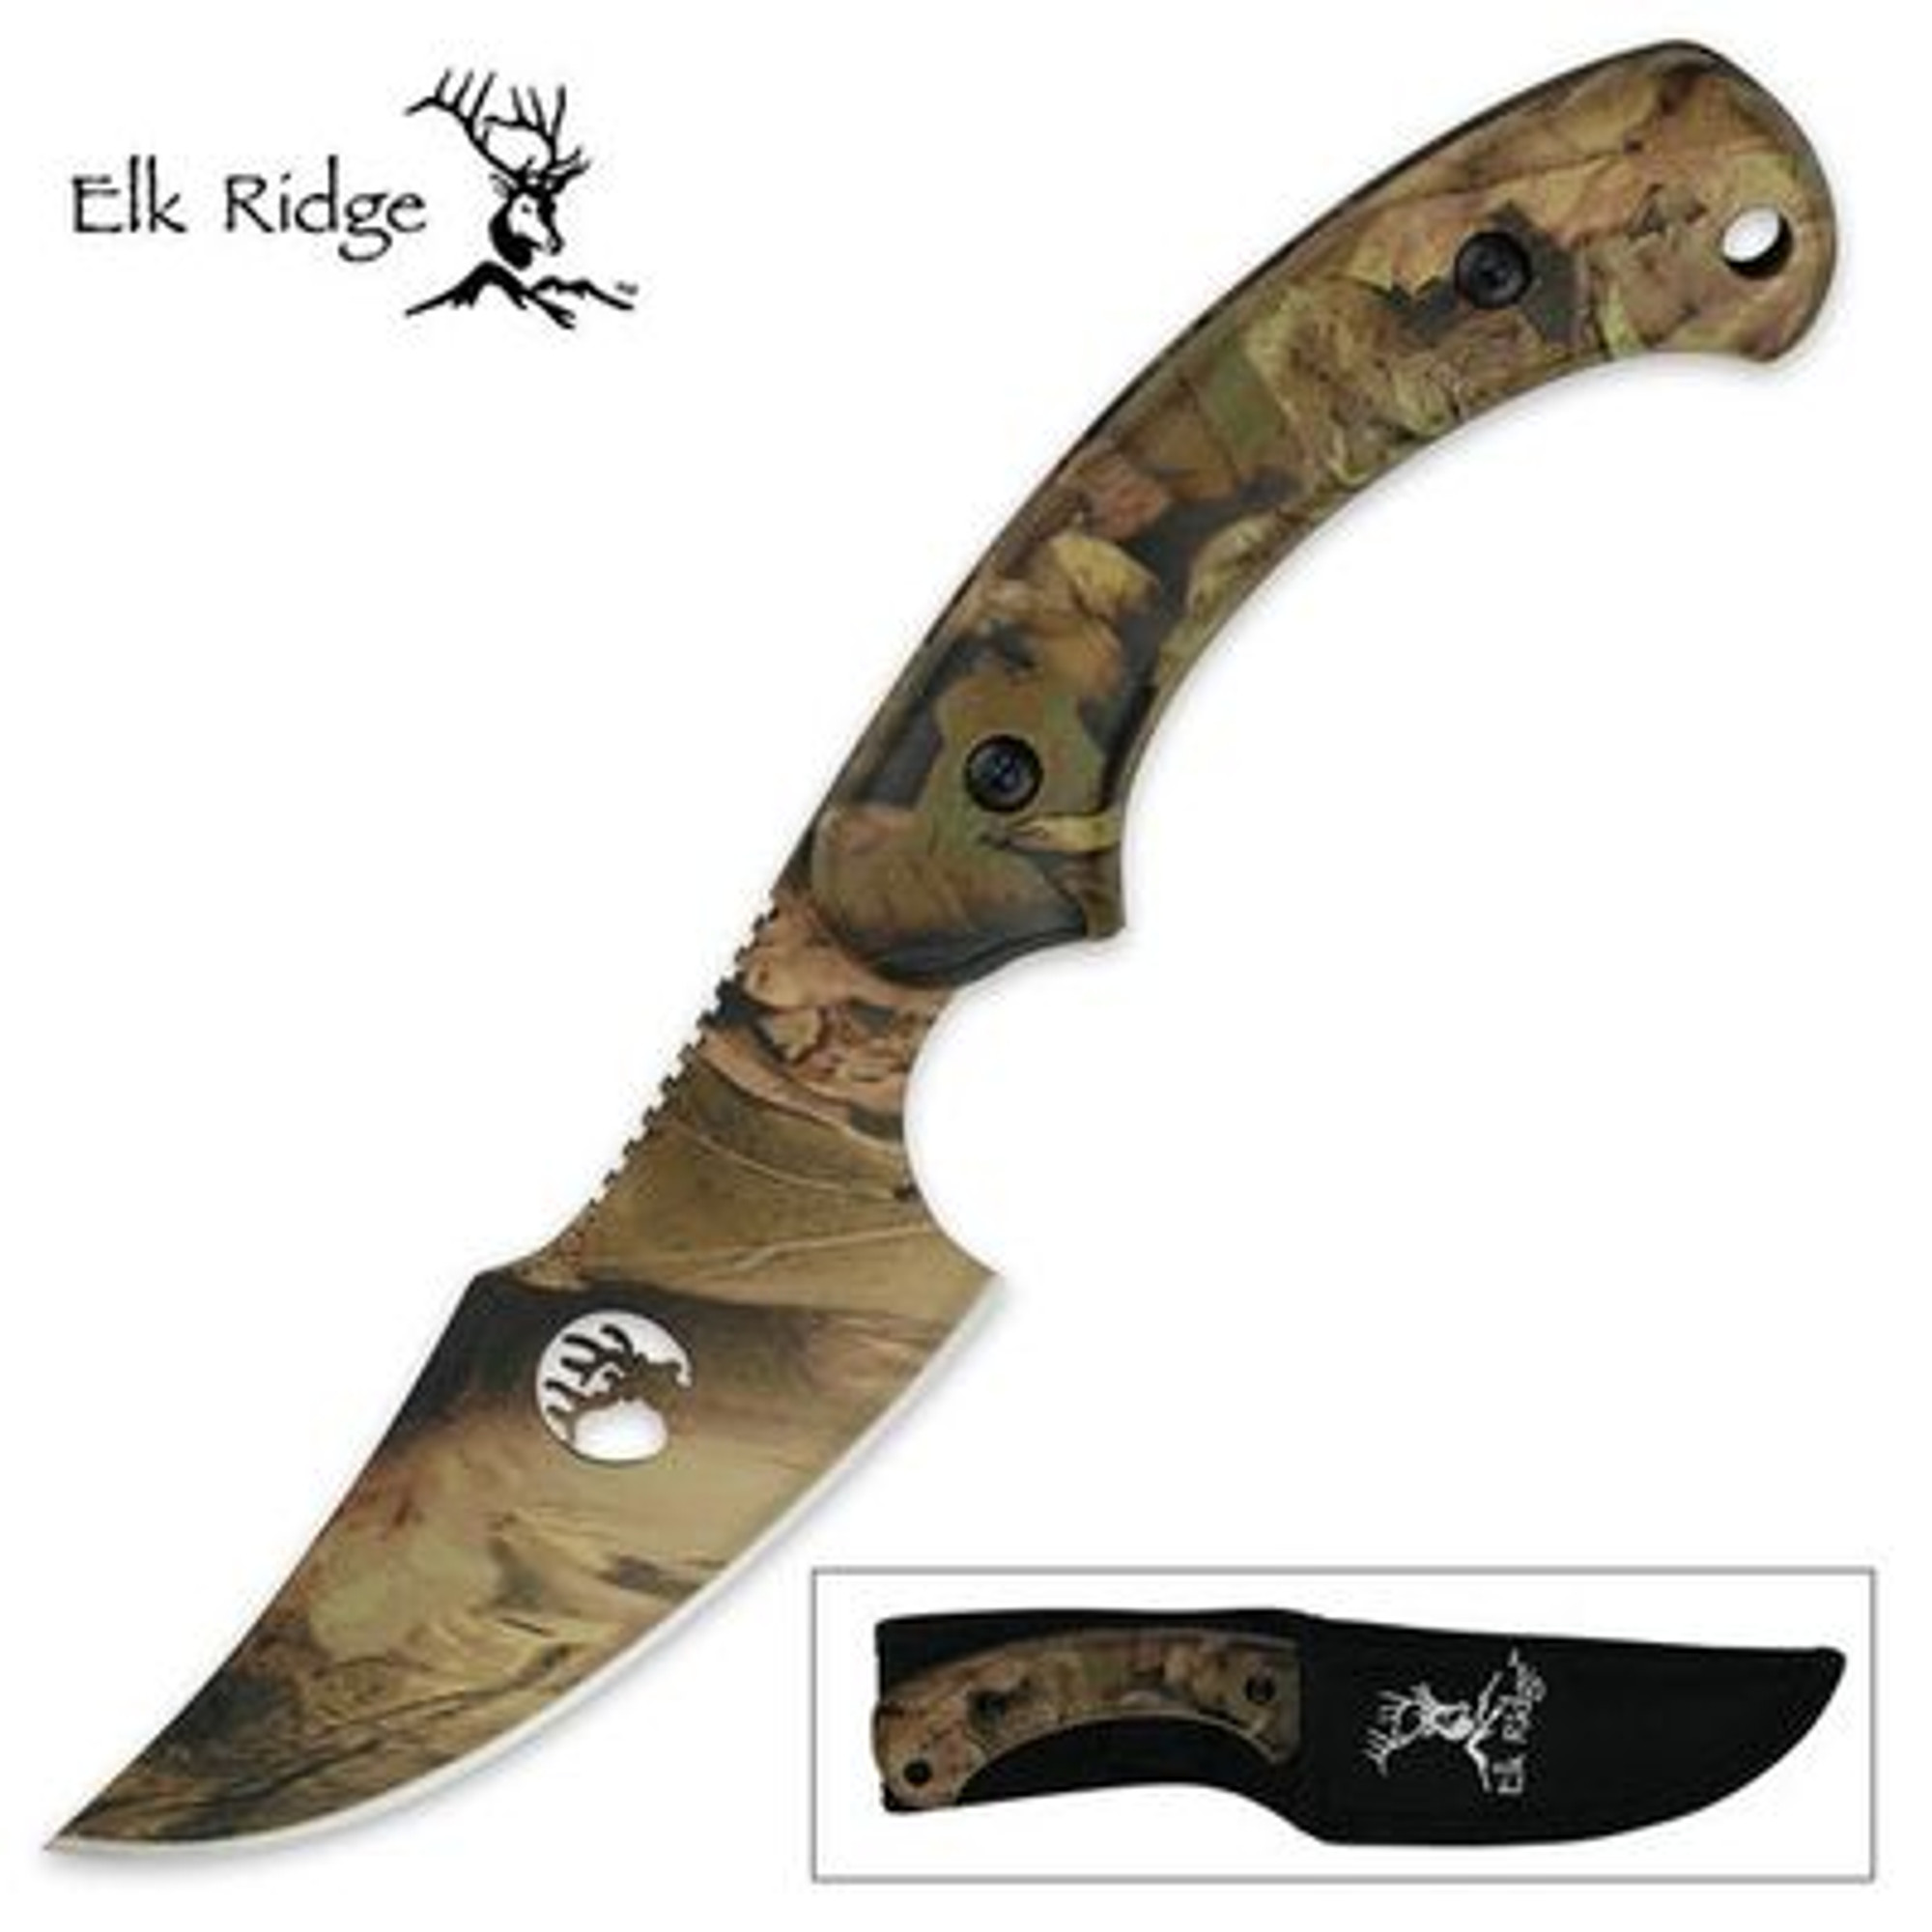 Elk Ridge Tom Anderson Full Tang Fixed Blade Skinner Knife - Woodland Camo